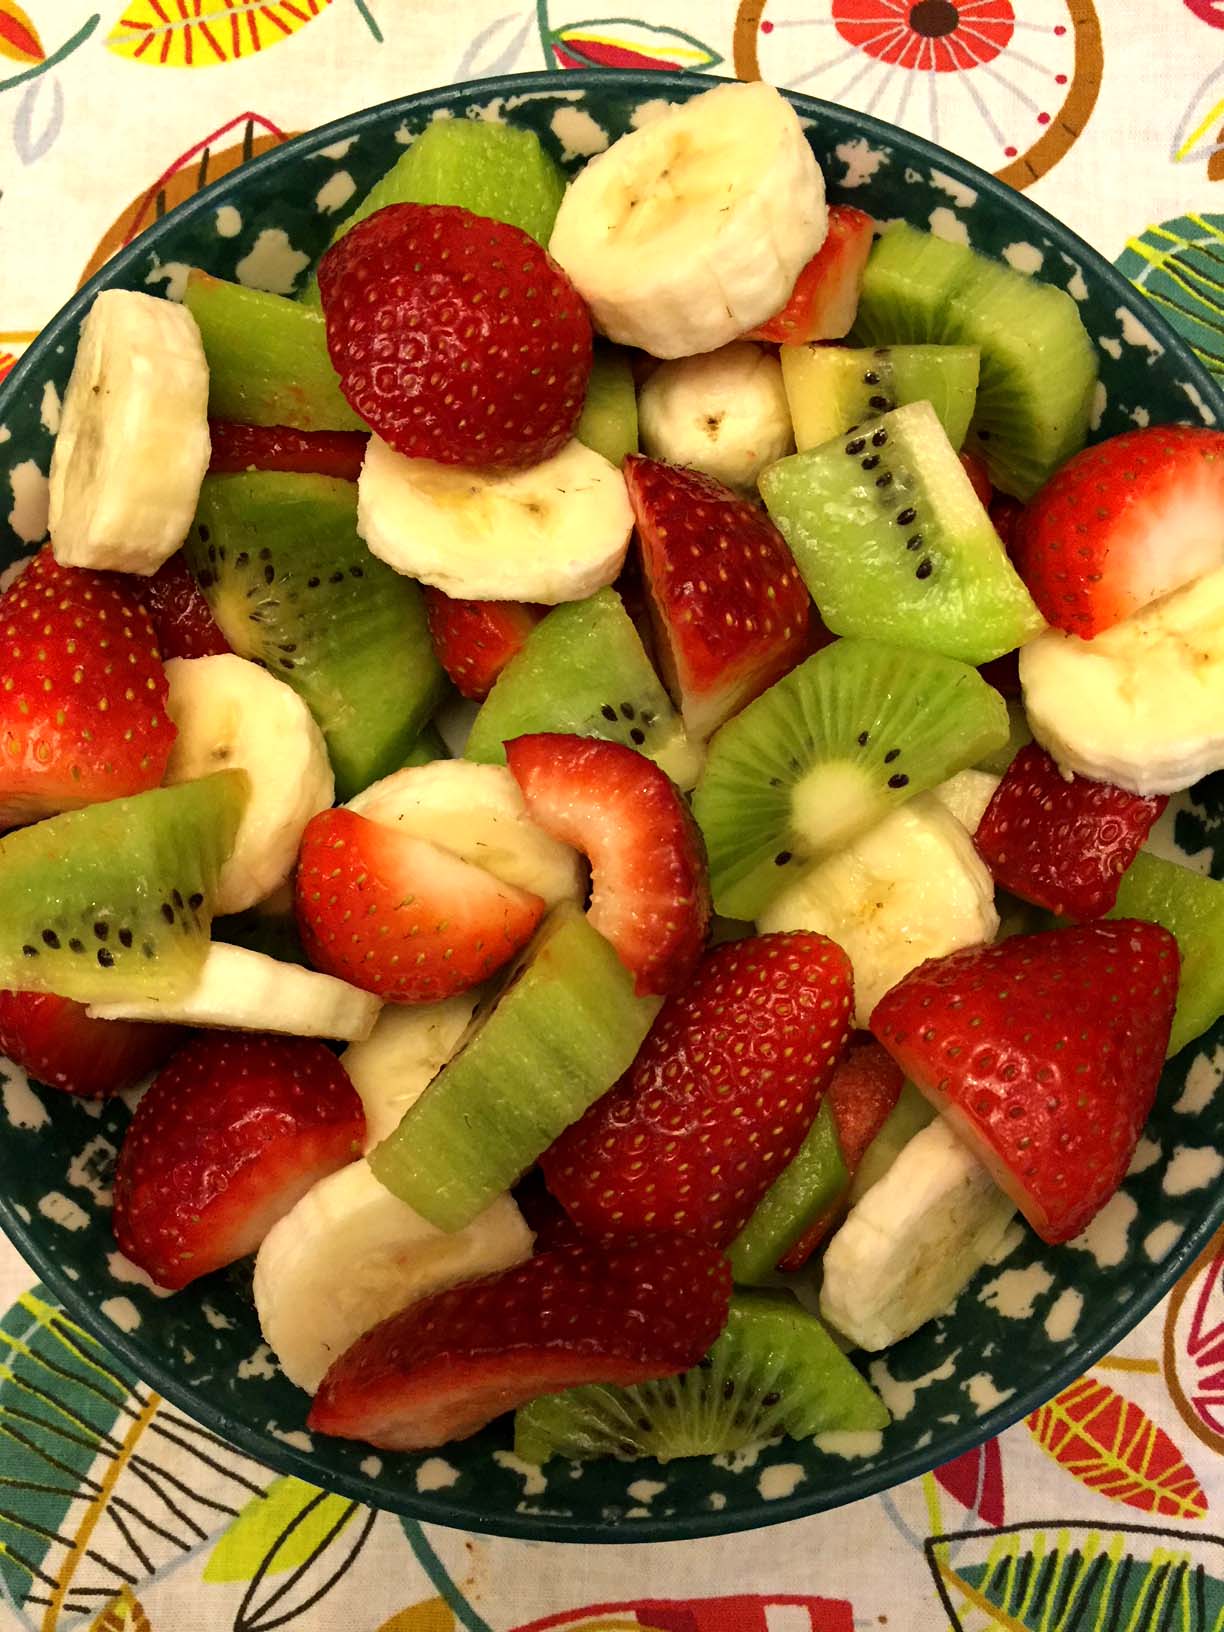 Christmas Fruit Salad With Strawberries, Kiwis and Bananas – Red, Green ...